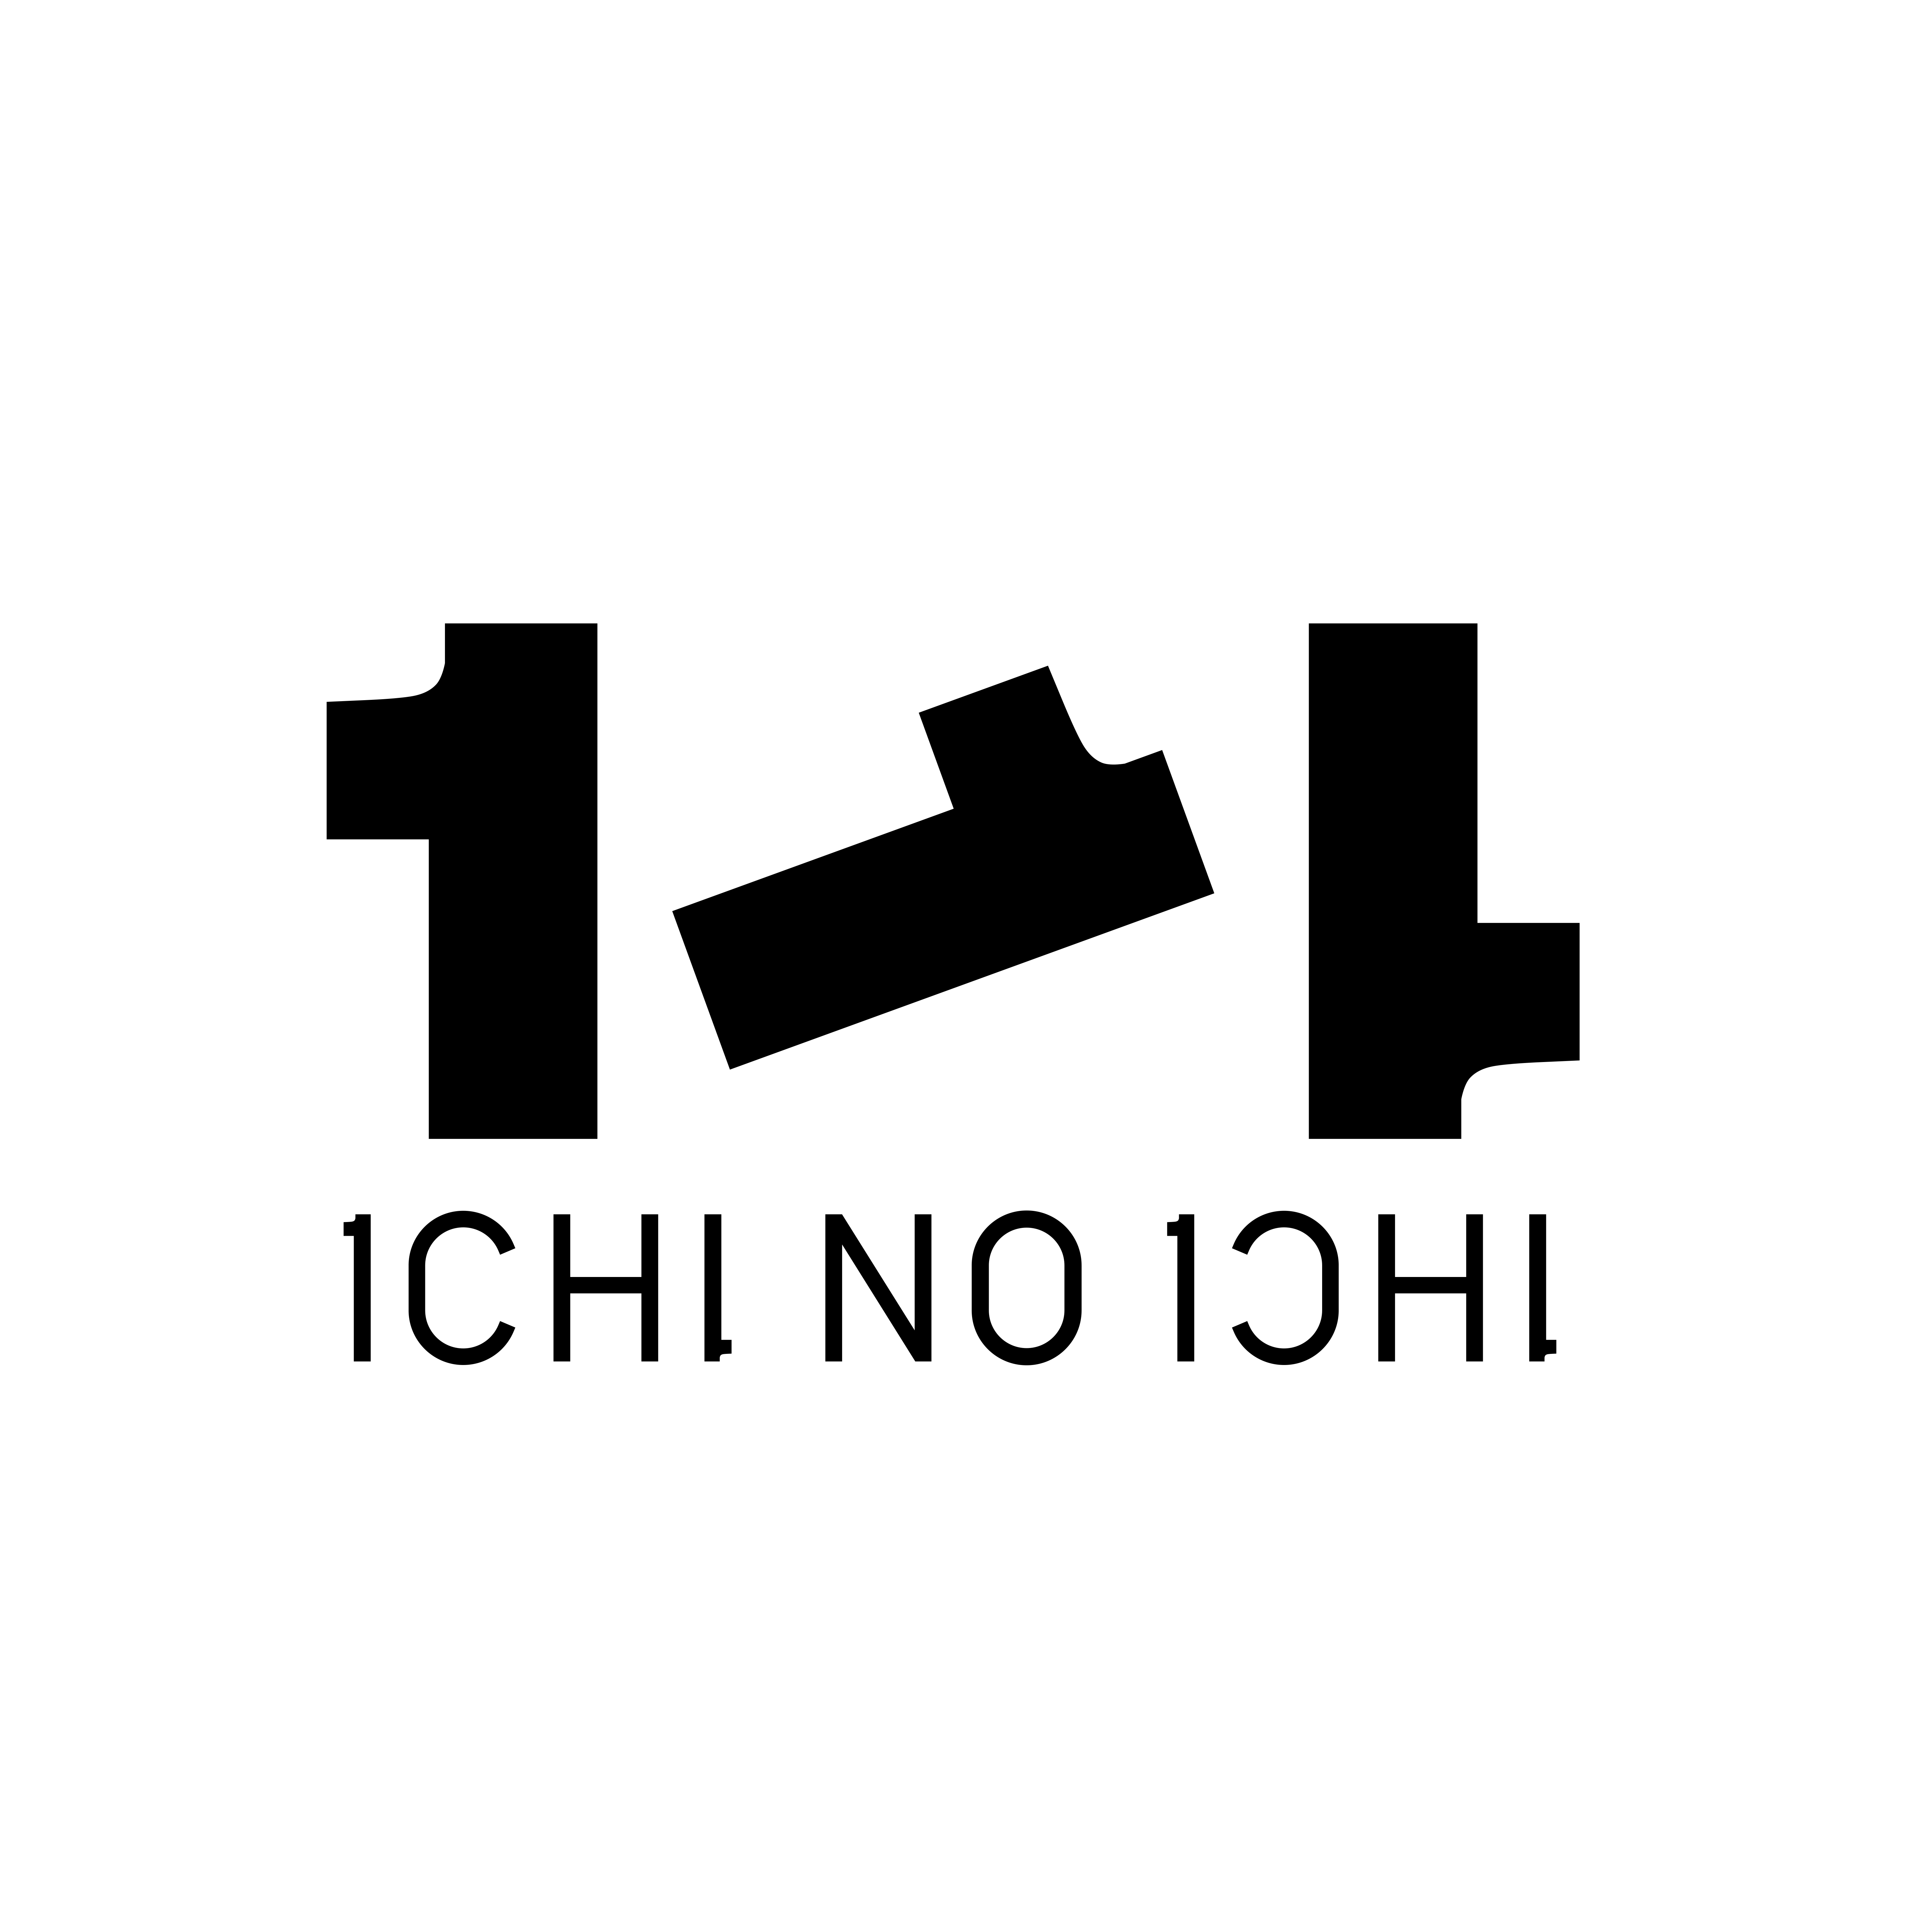 1-1 Architects 一級建築士事務所ロゴ